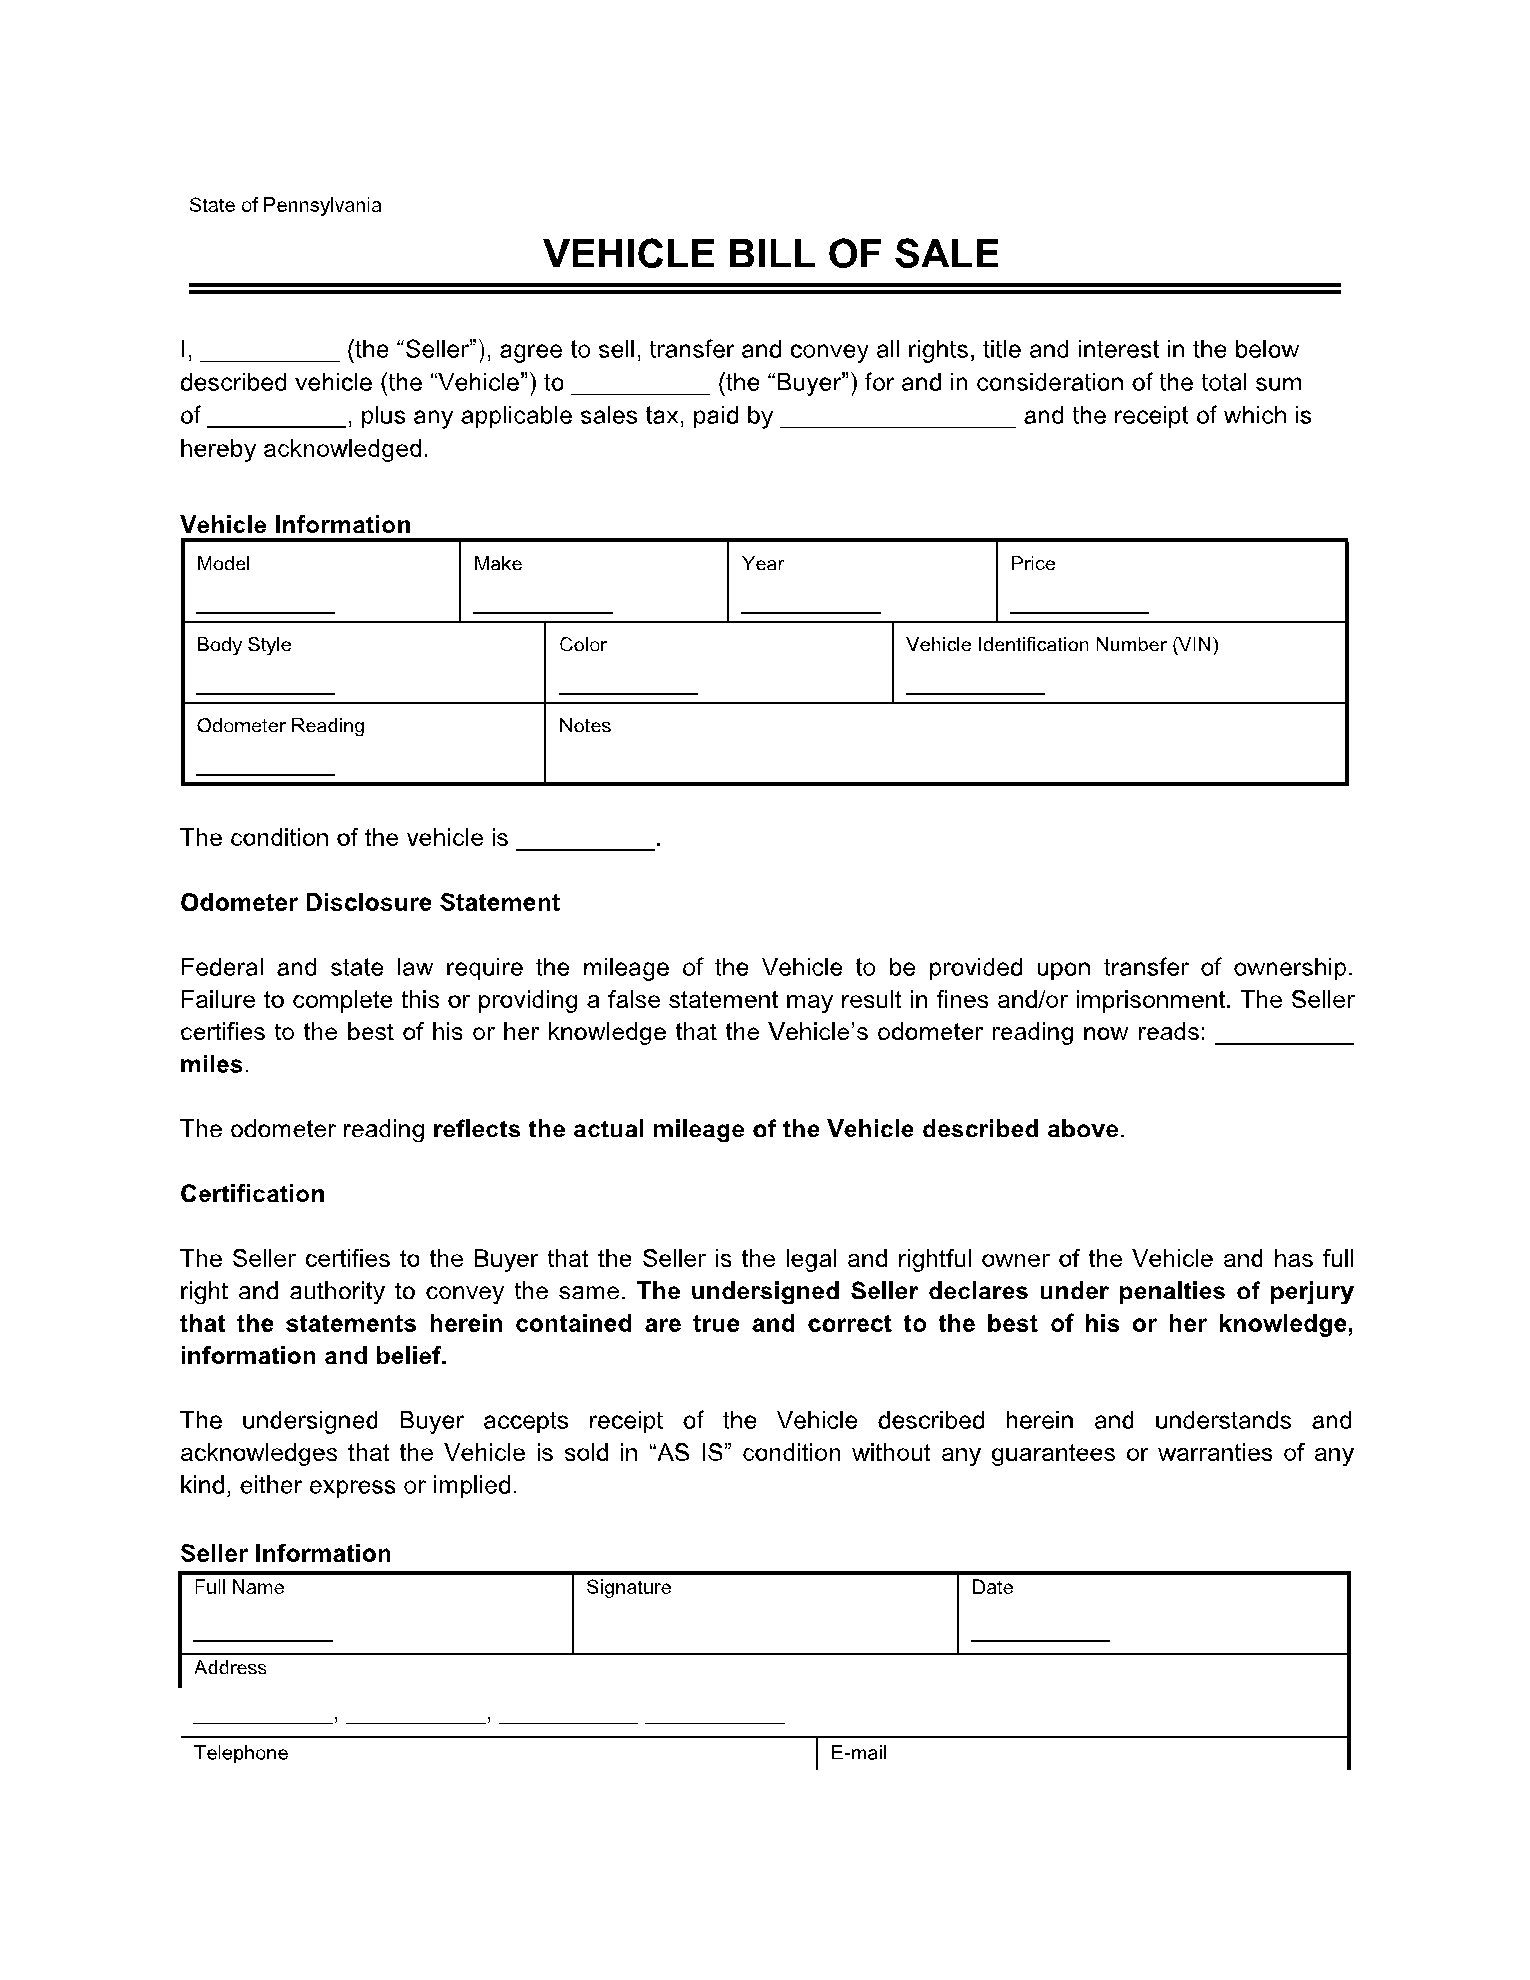 Pennsylvania Vehicle Bill of Sale